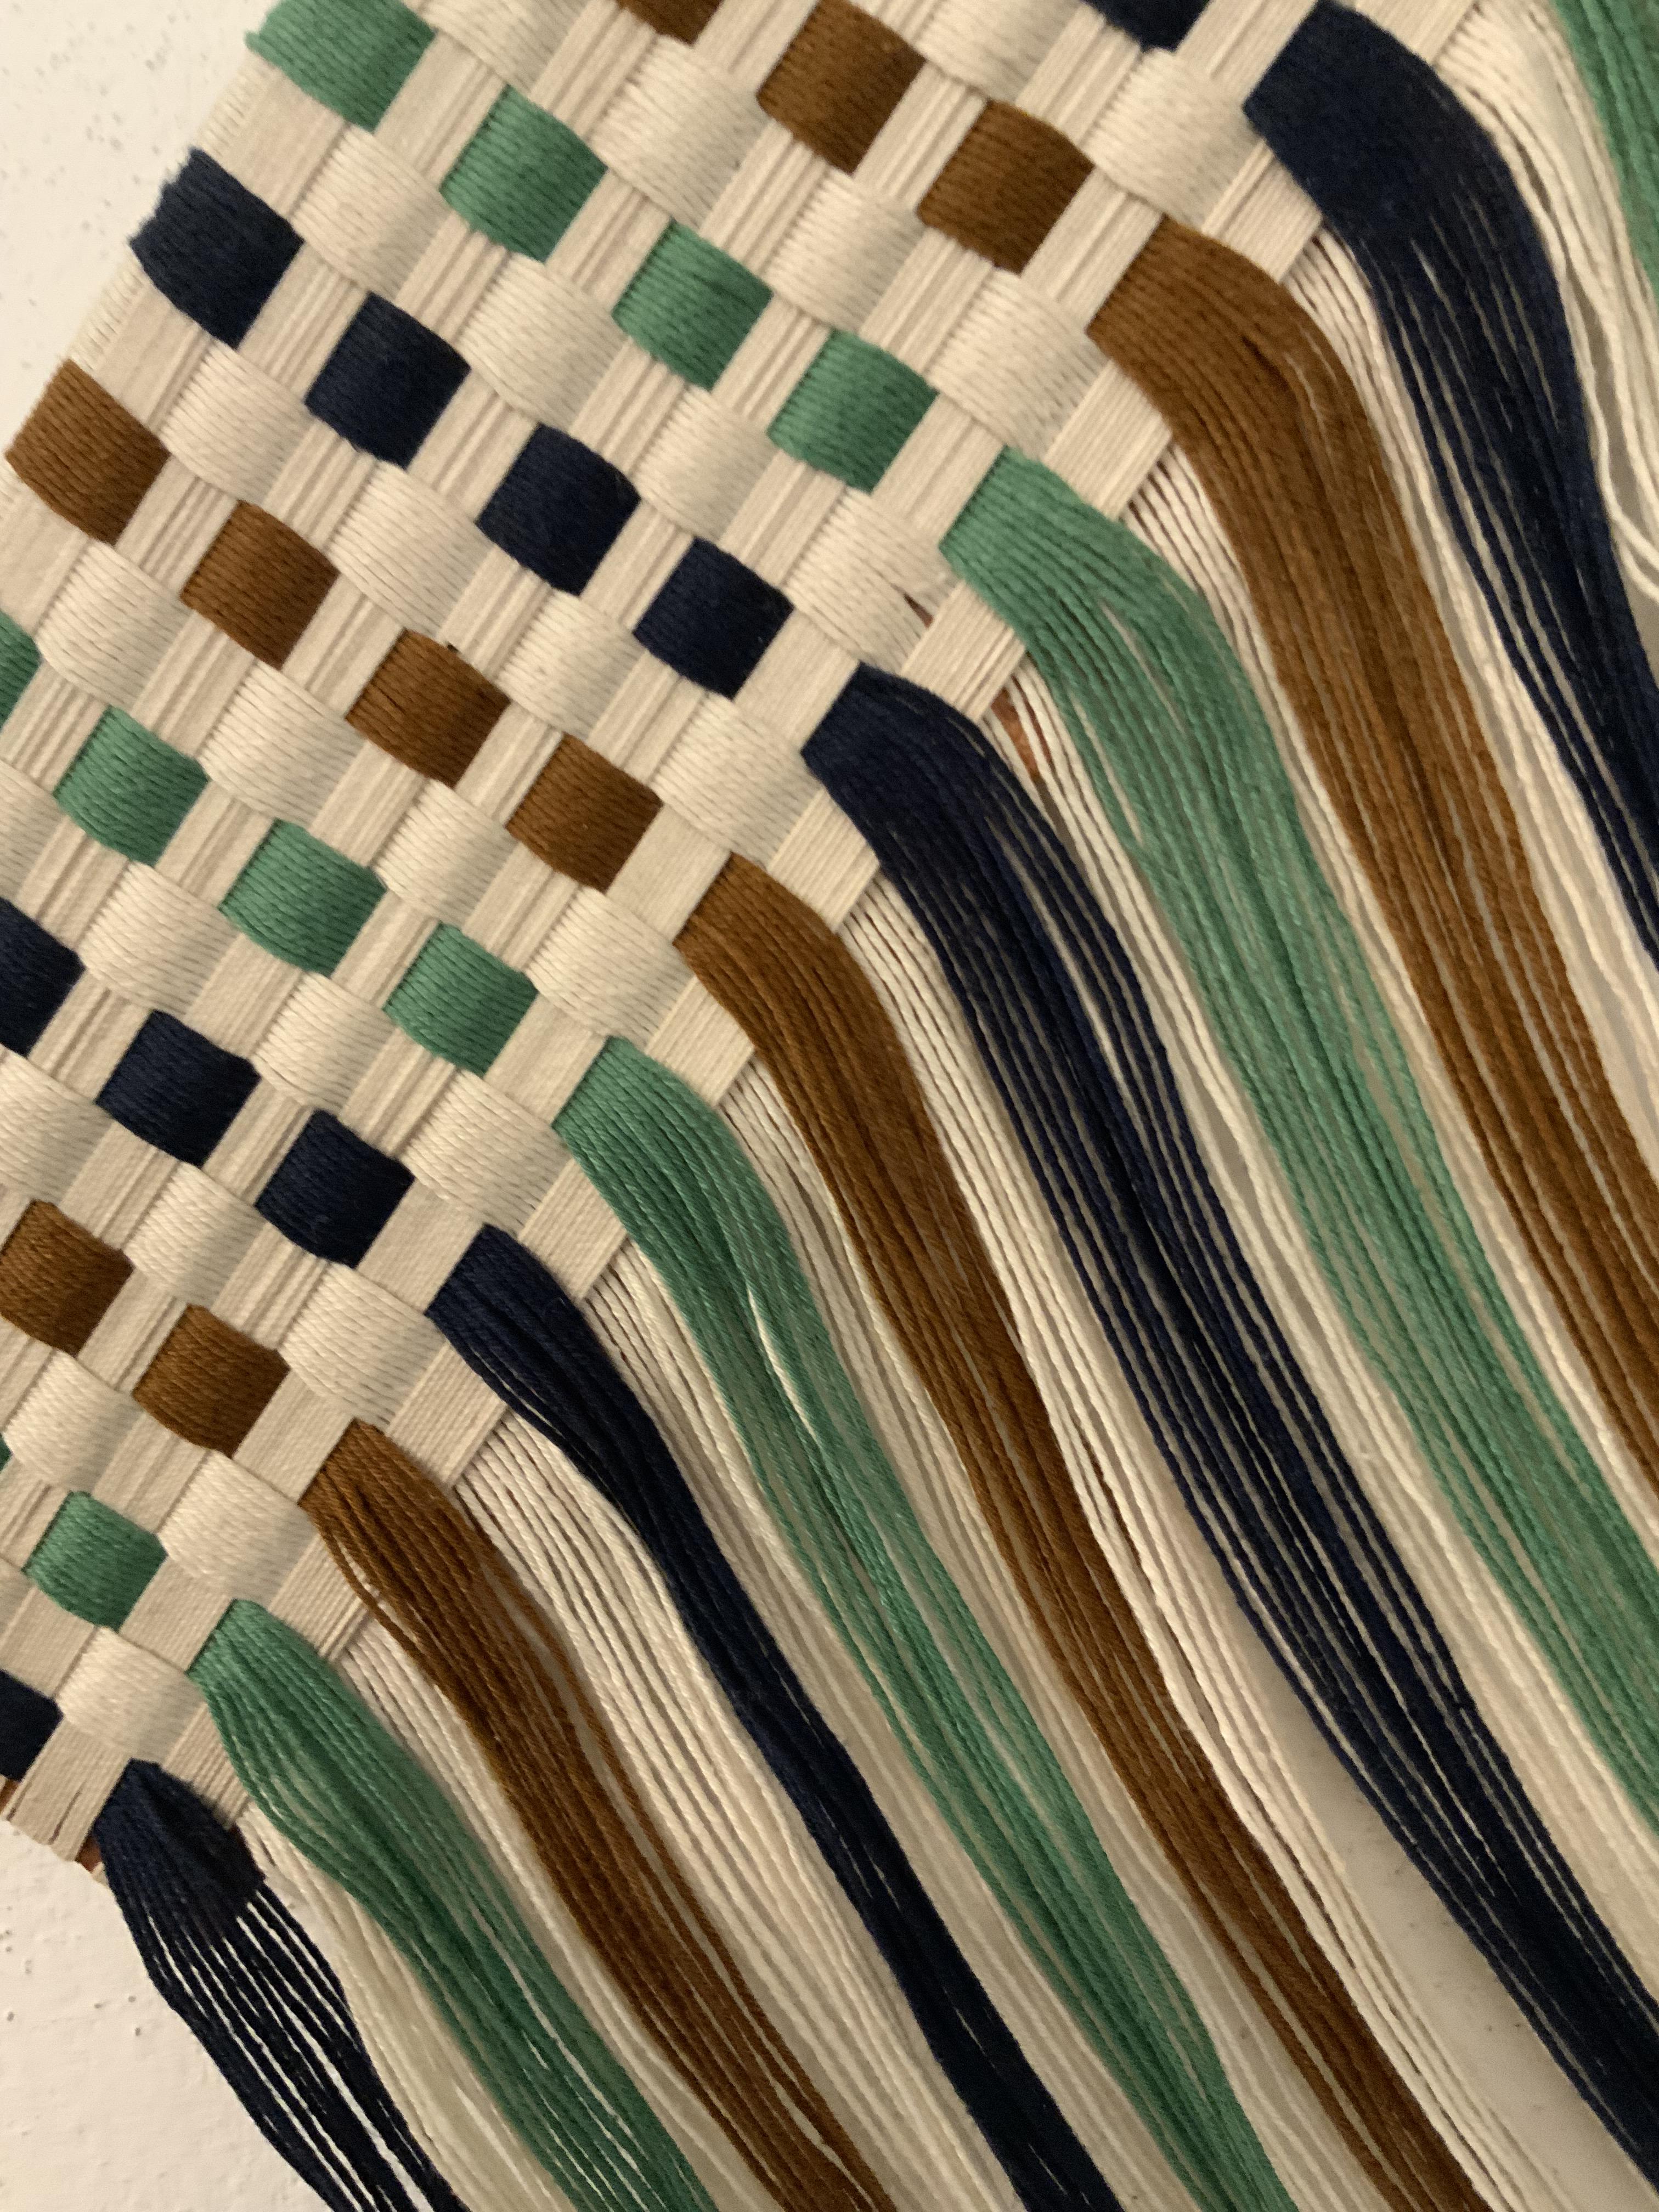 Beautiful Wooven Neutral Colored Piece  - Contemporary Sculpture by Arozarena De La Fuente